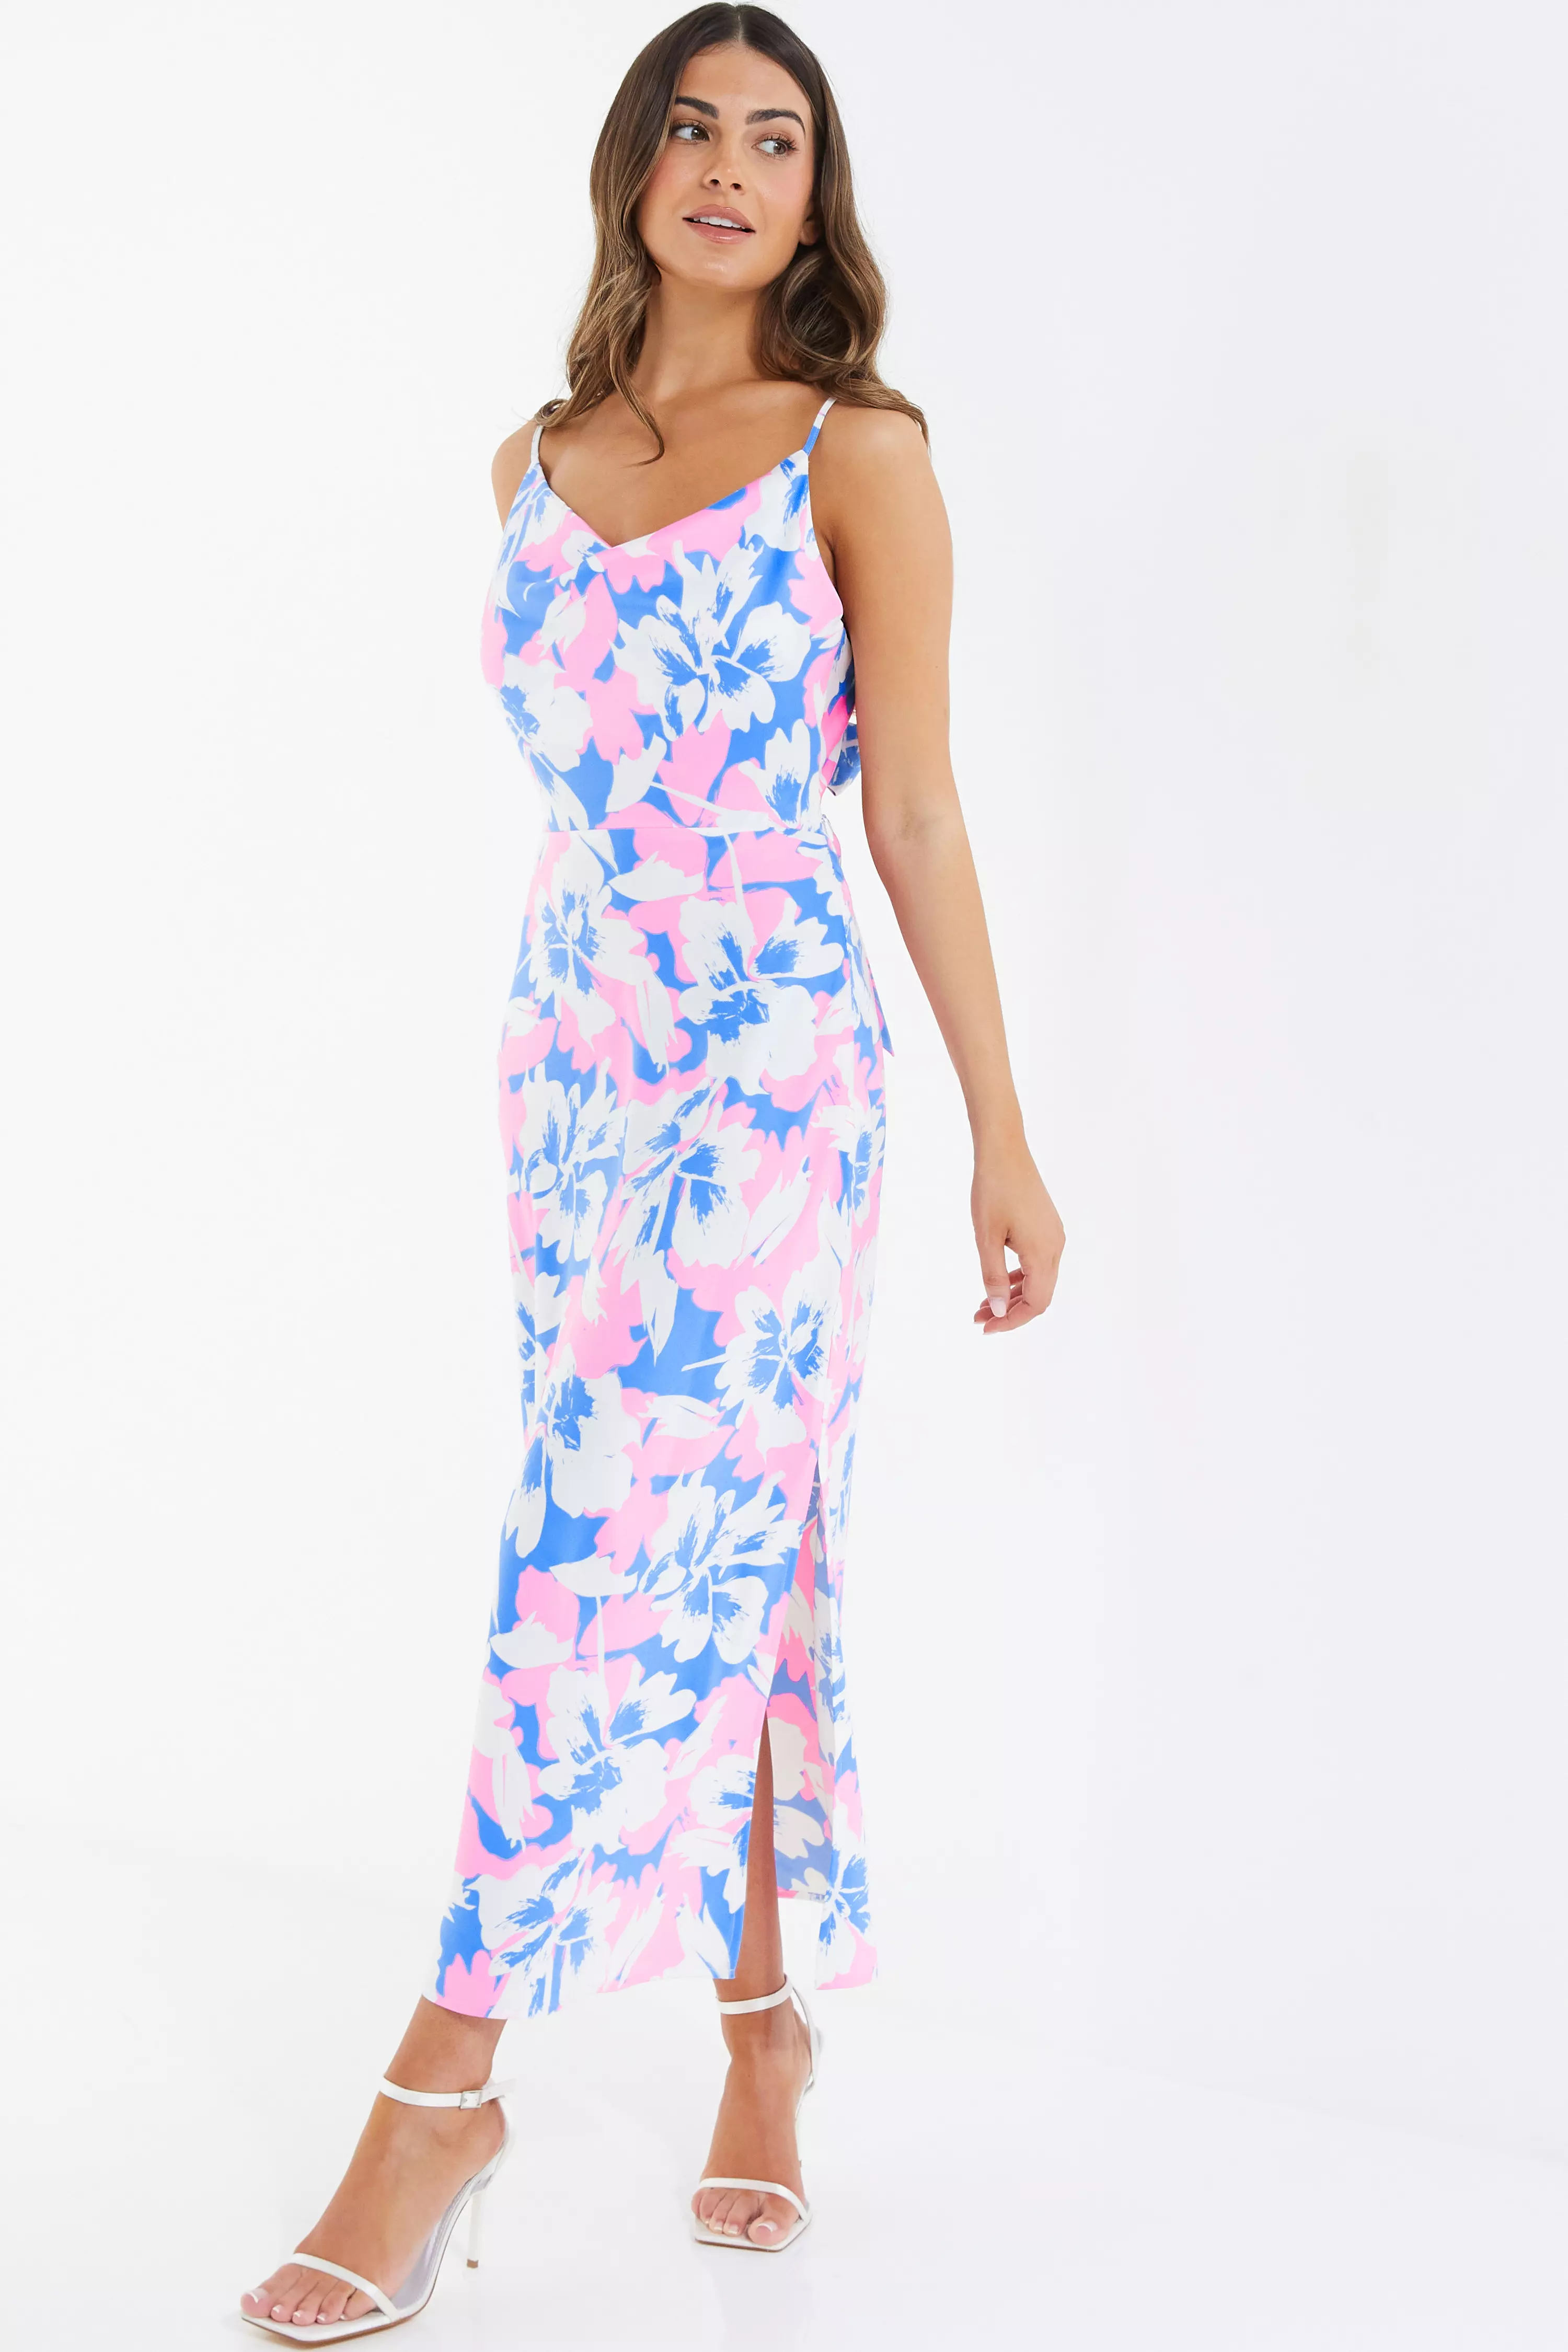 Petite Blue Floral Tie Back Midi Dress - QUIZ Clothing